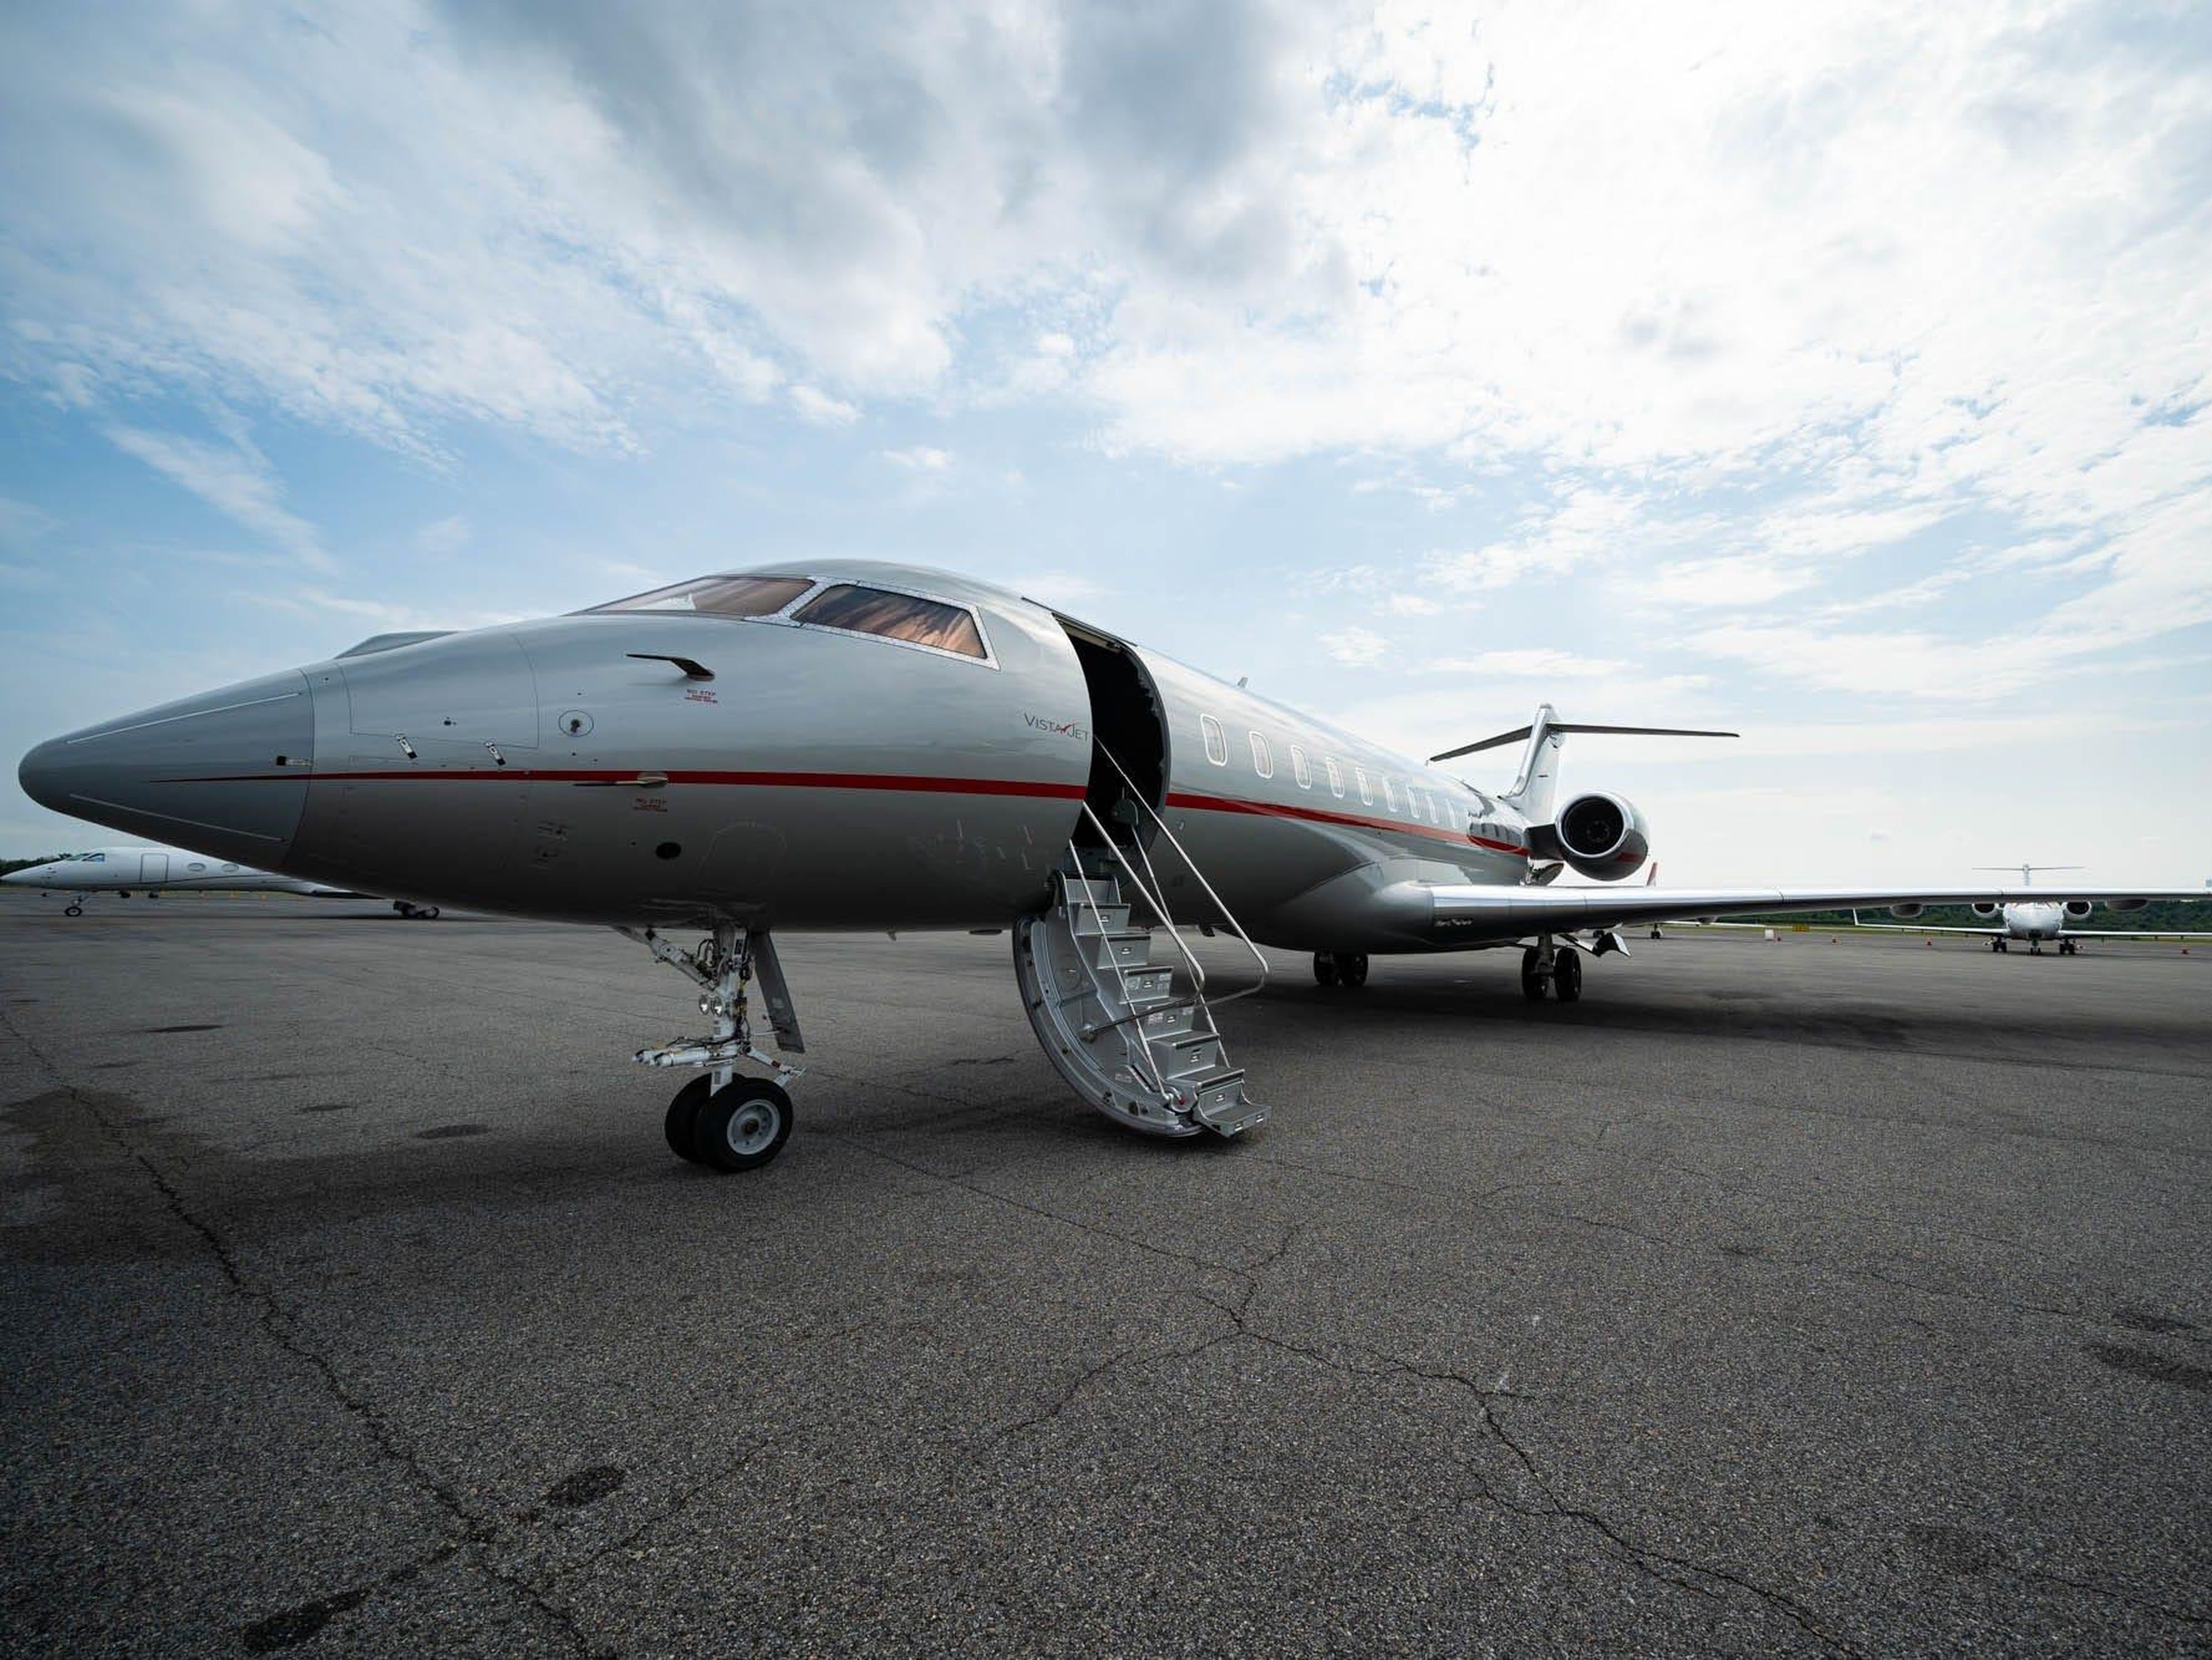 A VistaJet Bombardier Global 6000 aircraft. David Slotnick/Business Insider